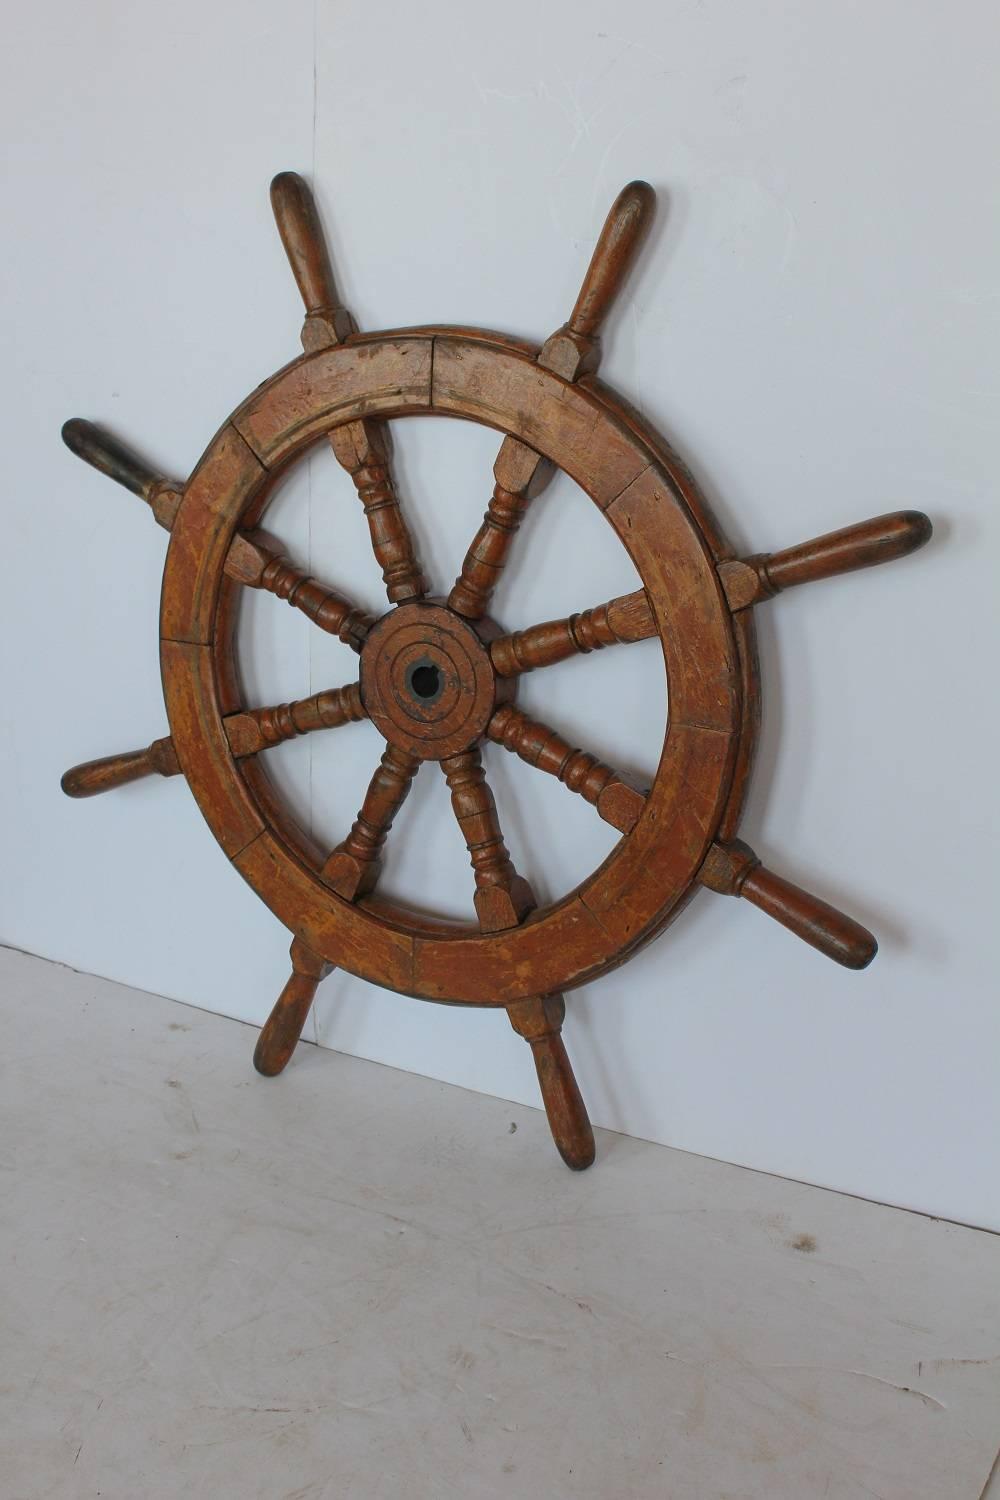 Late 19th century ship steering wheel. Great patina.